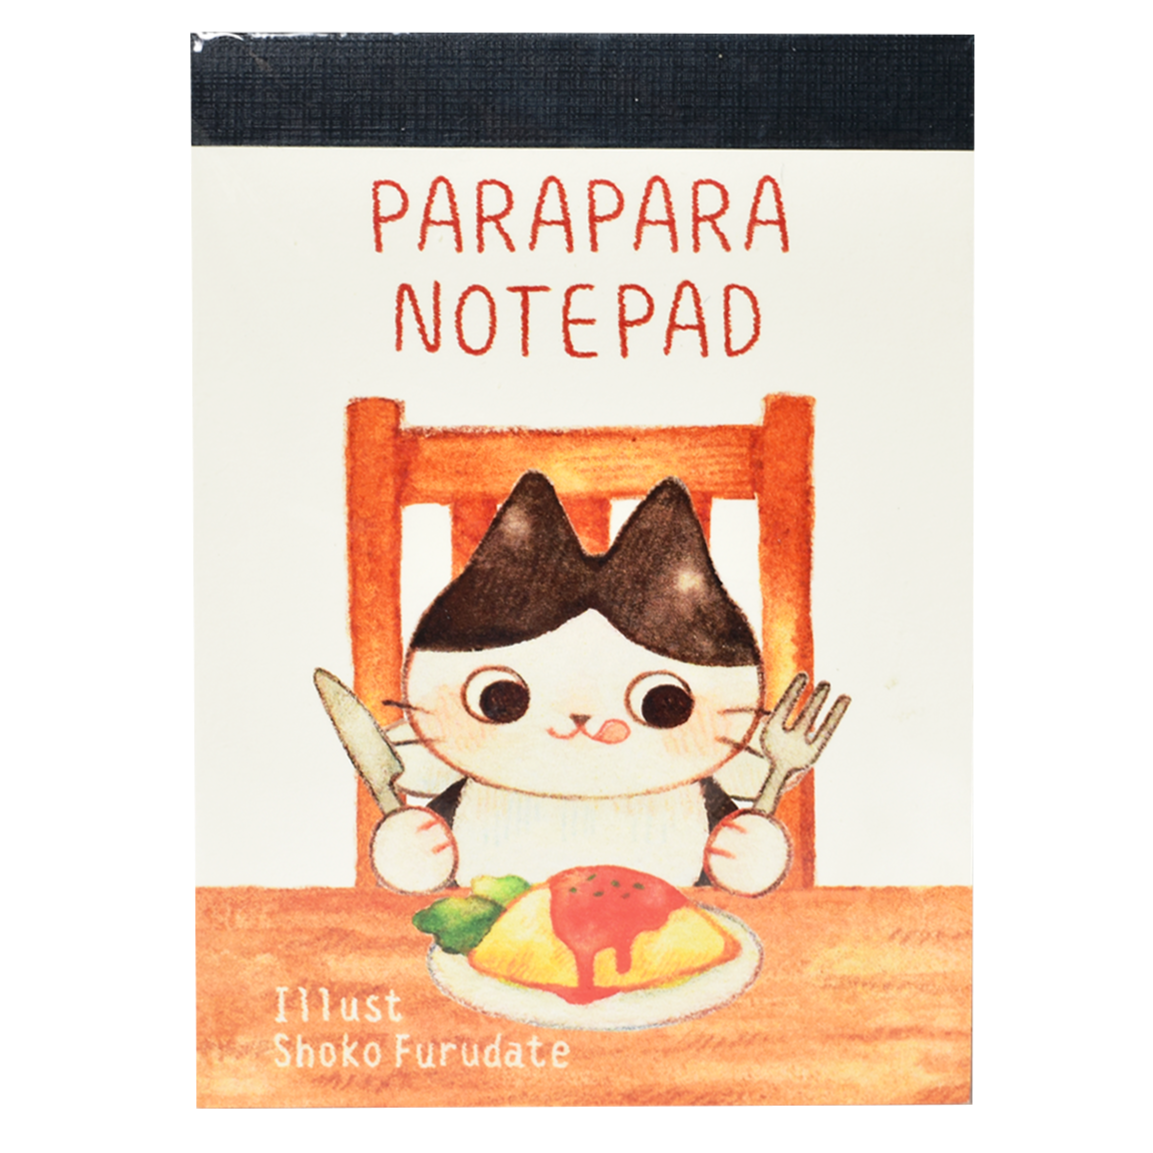 HOW HOUSE Parapara Flipbook Notepad "Shoko Furudate - The Foodie"